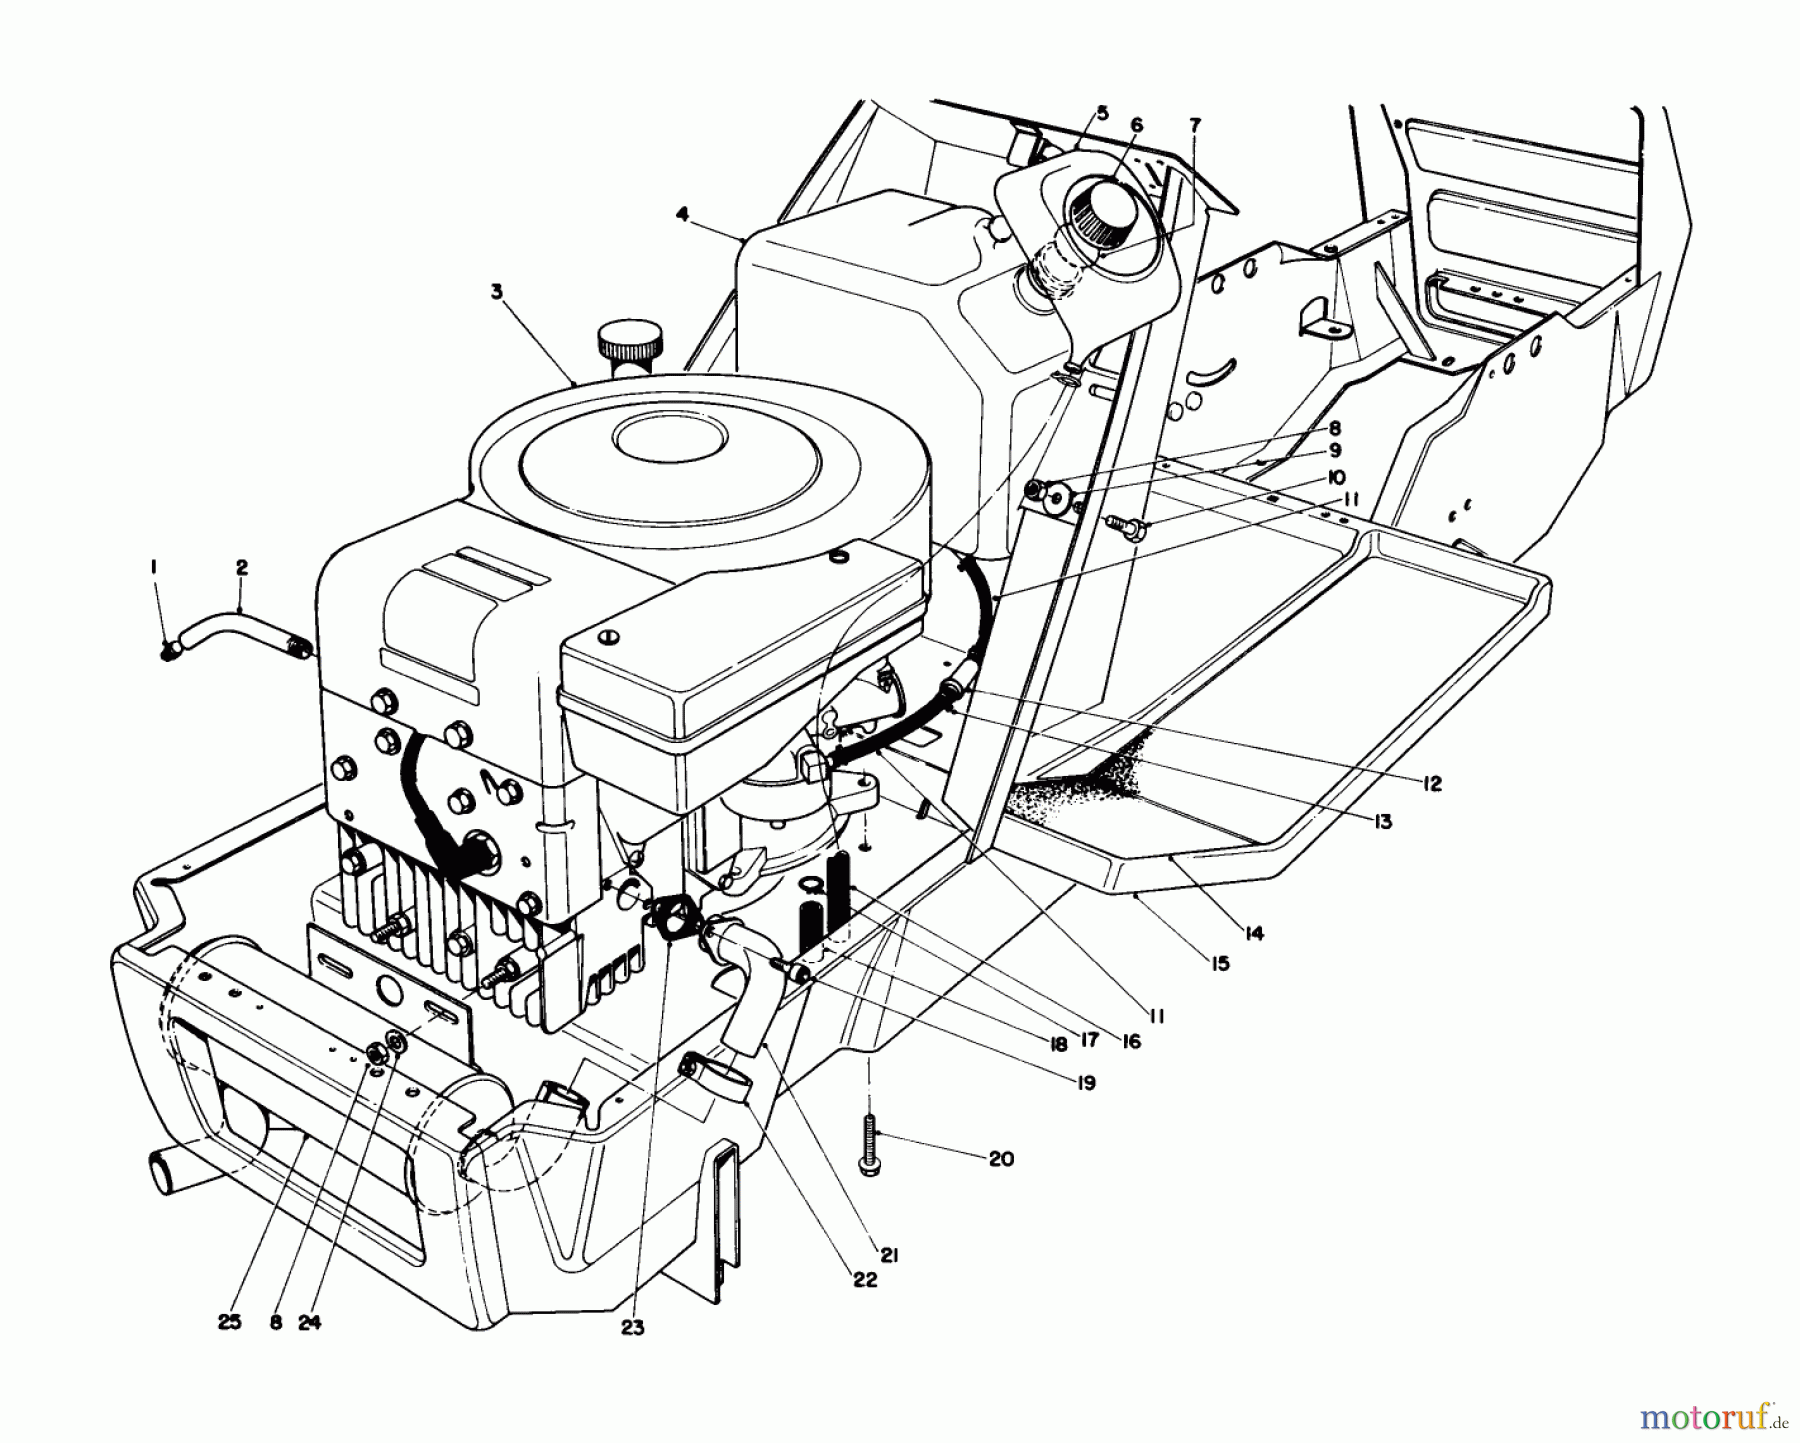  Toro Neu Mowers, Lawn & Garden Tractor Seite 1 57300 (8-32) - Toro 8-32 Front Engine Rider, 1977 (7000001-7999999) ENGINE ASSEMBLY